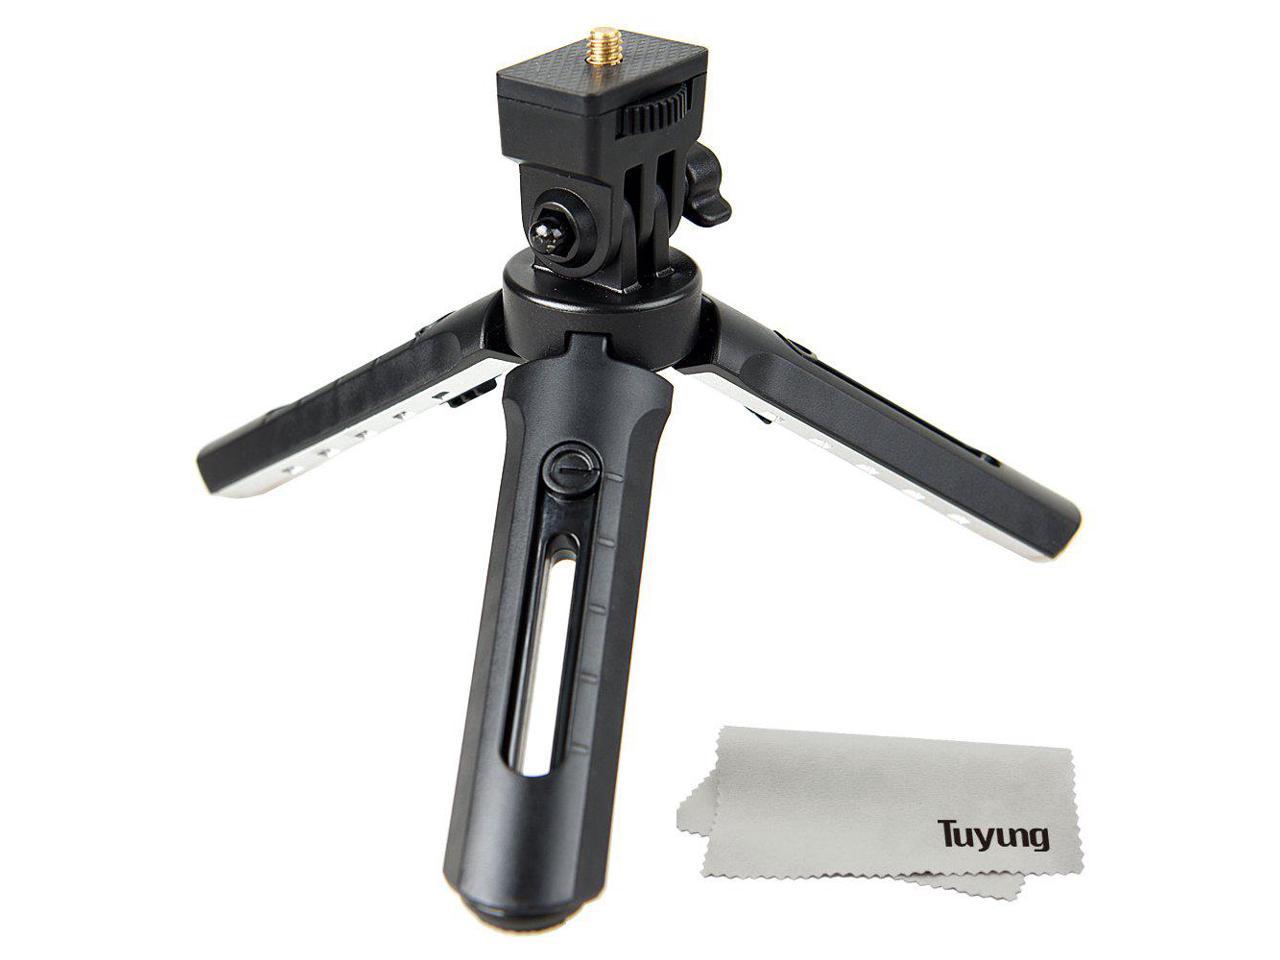 Neu Black Portable Mini Light Table Top Stand Tripod Grip Stabilizer For Cameras 